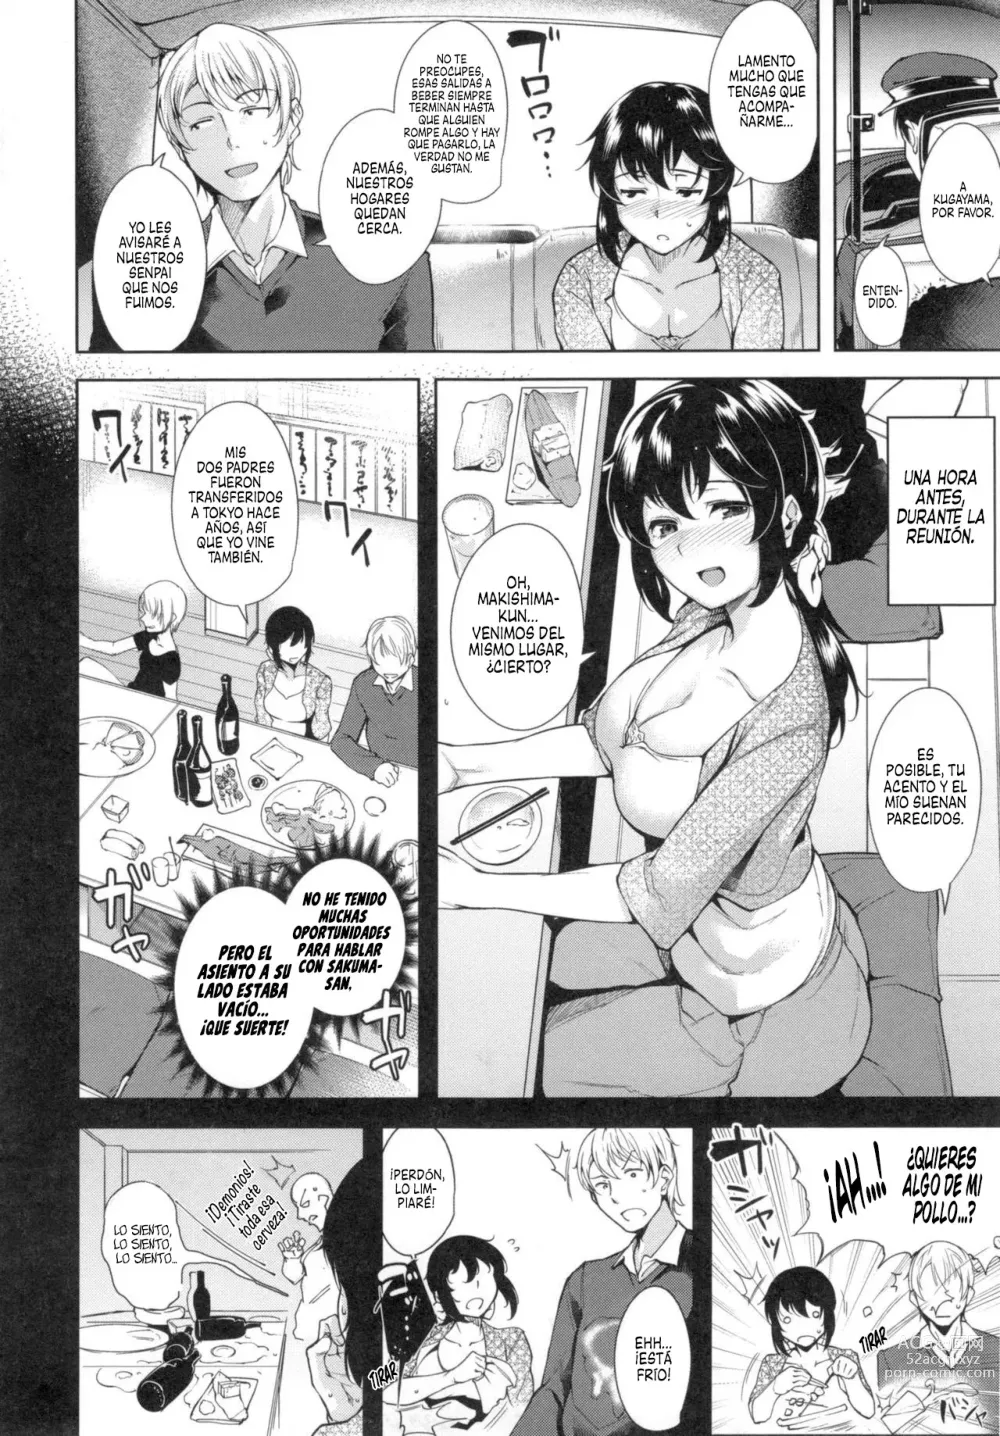 Page 2 of manga ¿Truco o Engaño?